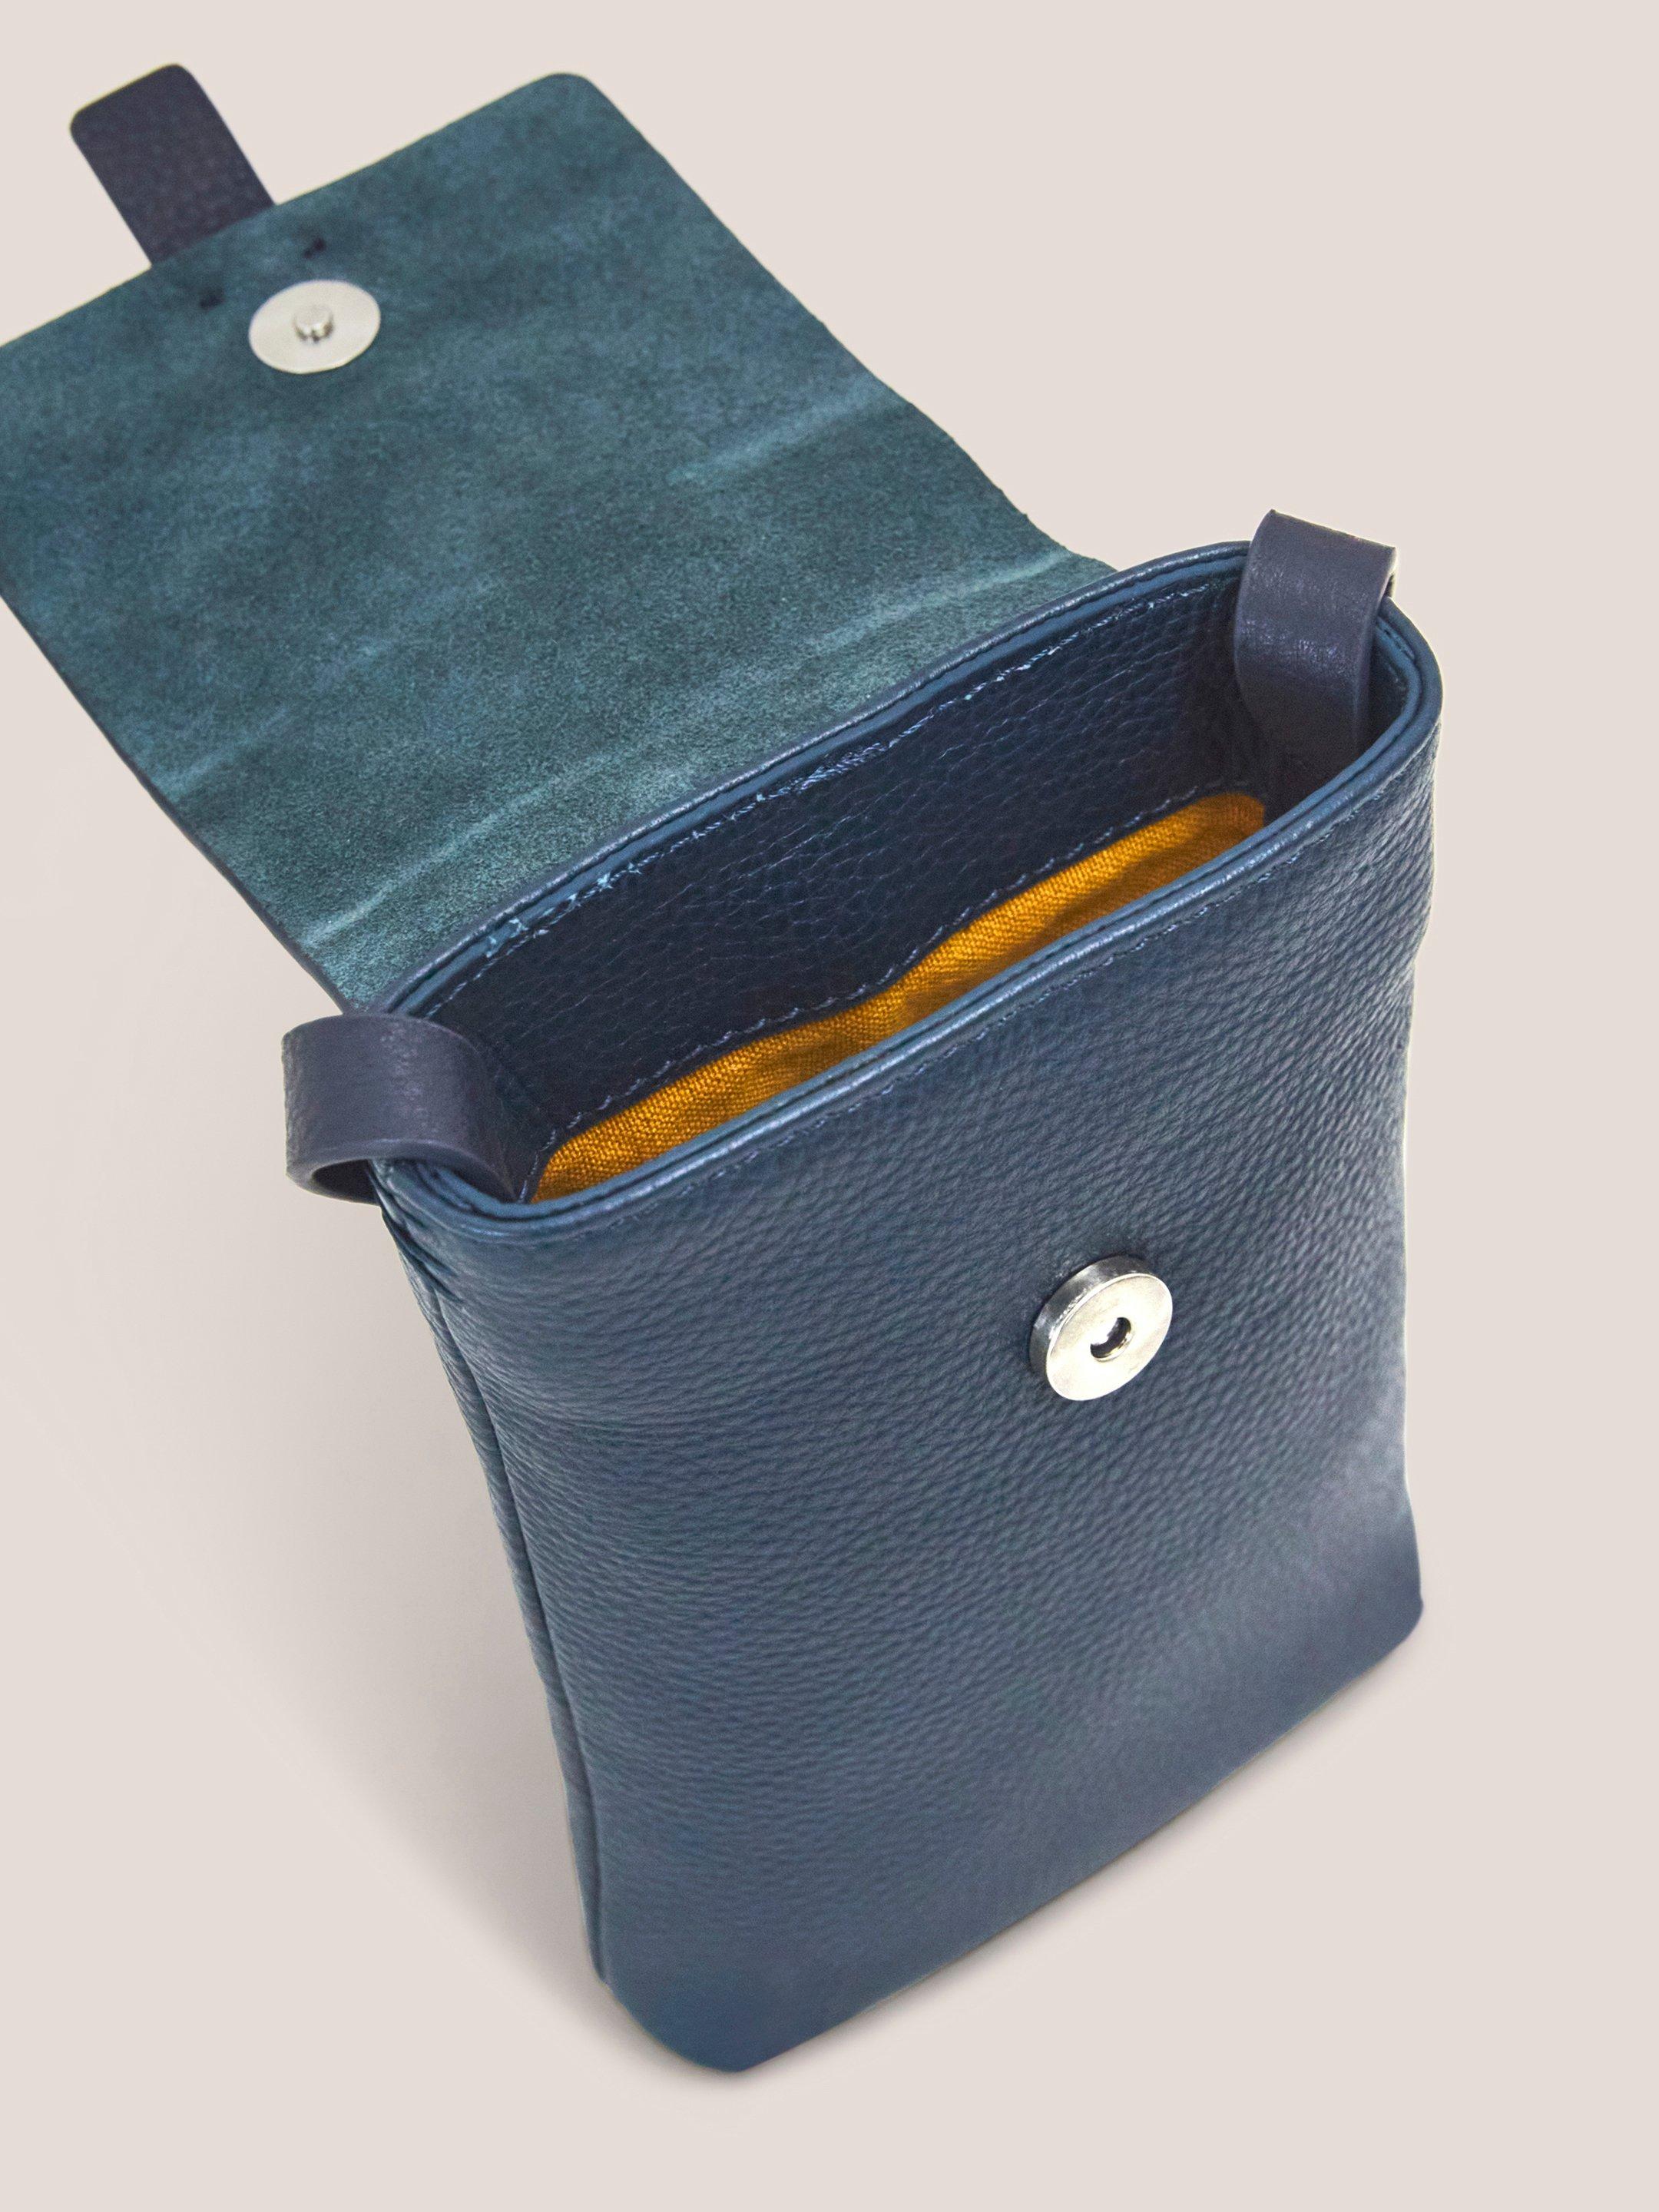 Clara Buckle Leather Phone Bag in DARK NAVY - FLAT FRONT